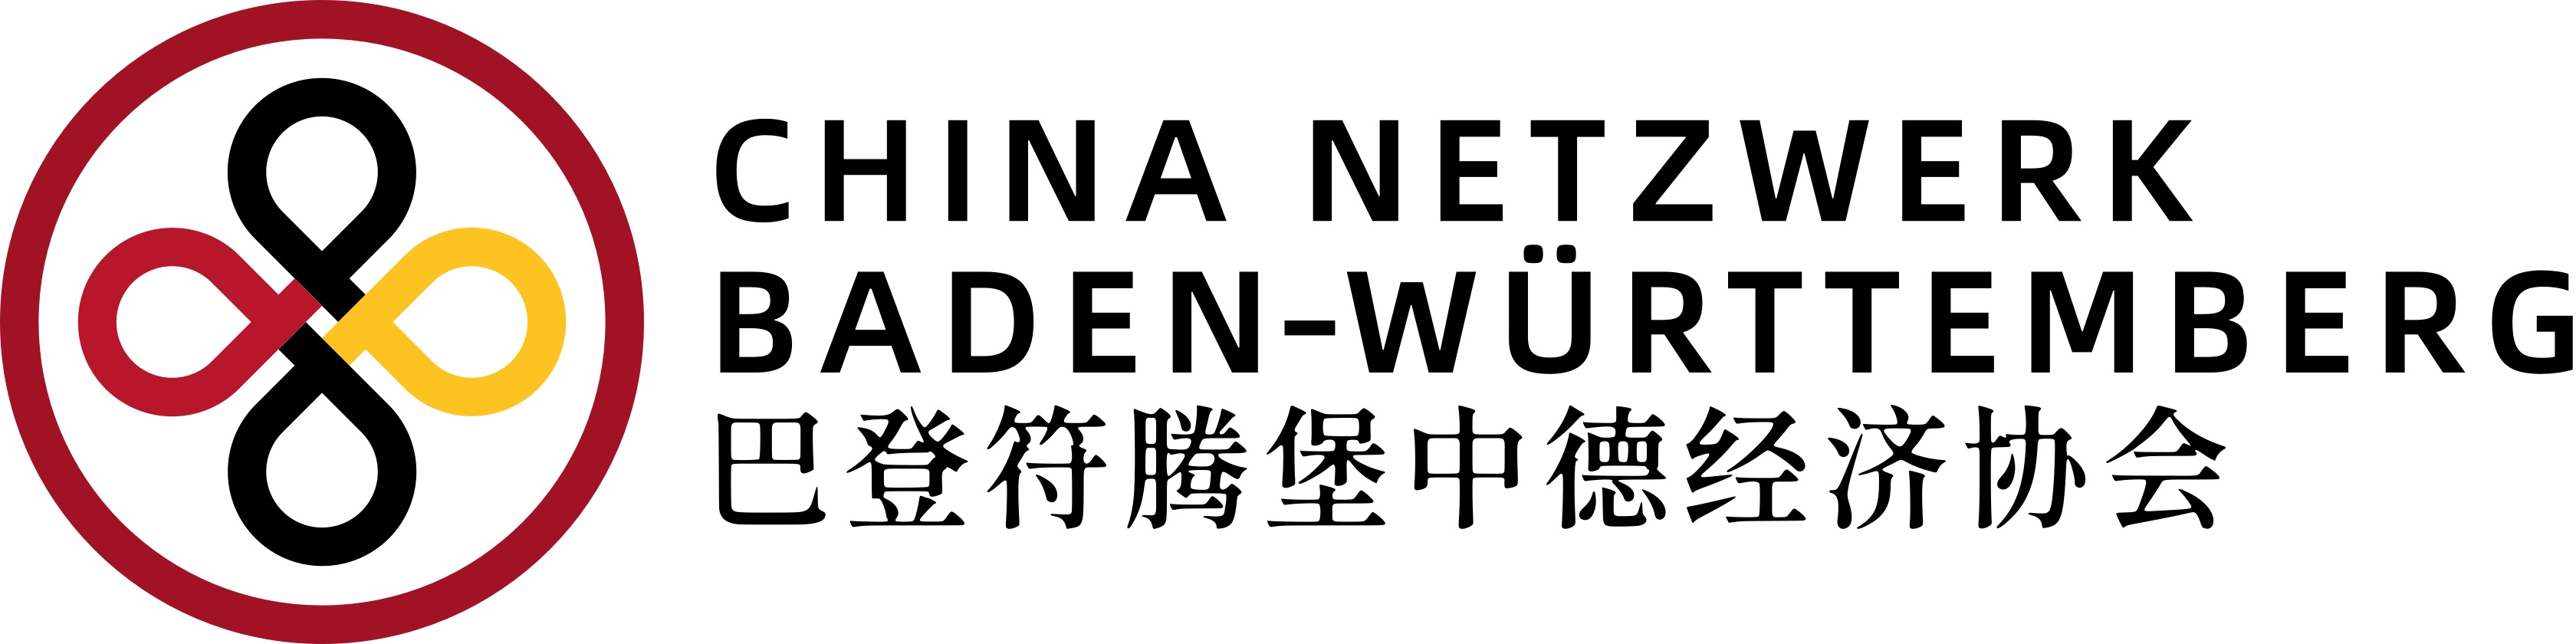 Cnbw Logo Jpeg